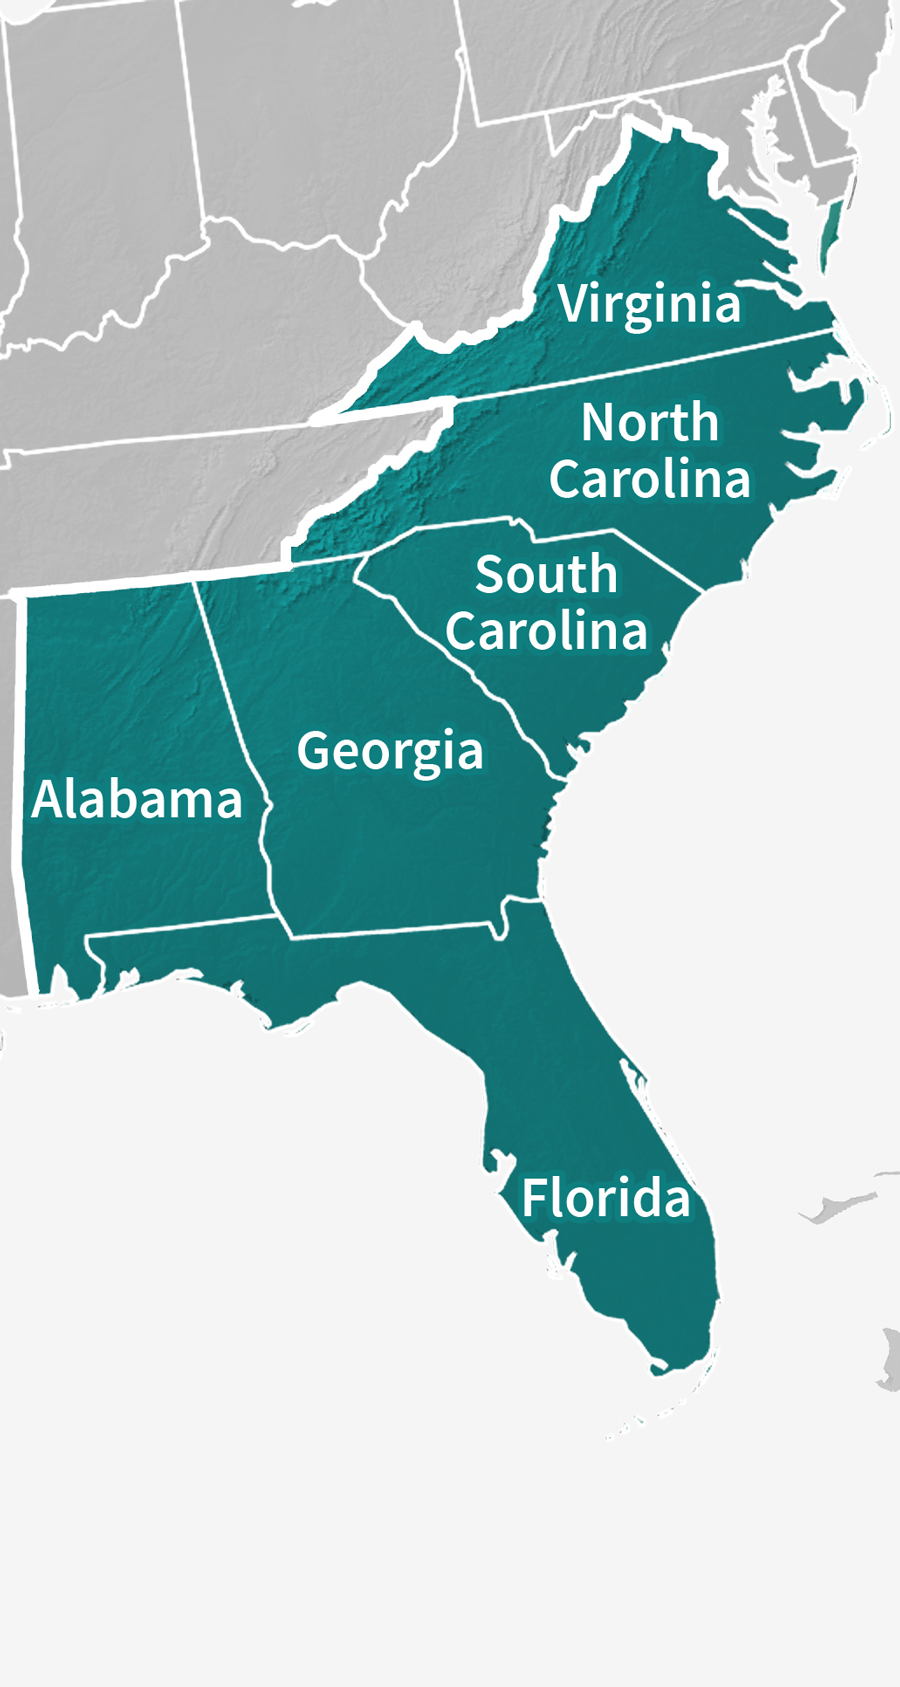 Map of the Southeast DEWS, which includes Alabama, Florida, Georgia, North Carolina, South Carolina, and Virginia